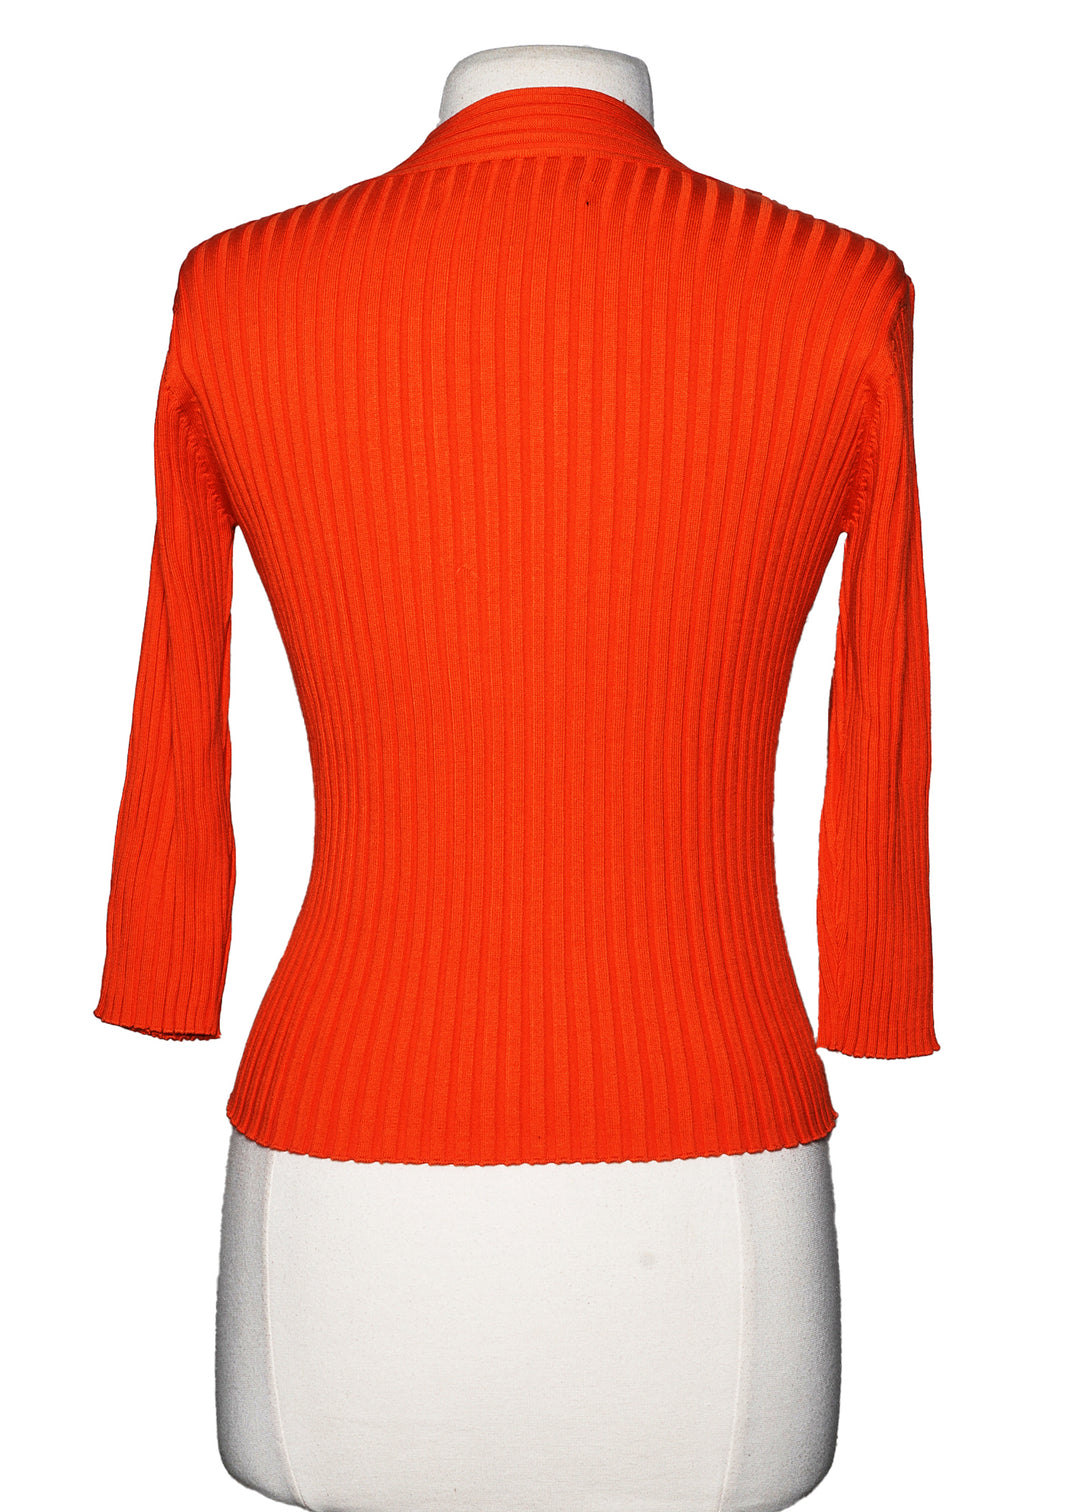 Jaime Sadock 3/4 Sleeve Knit Top - Orange - Size Medium - Skorzie